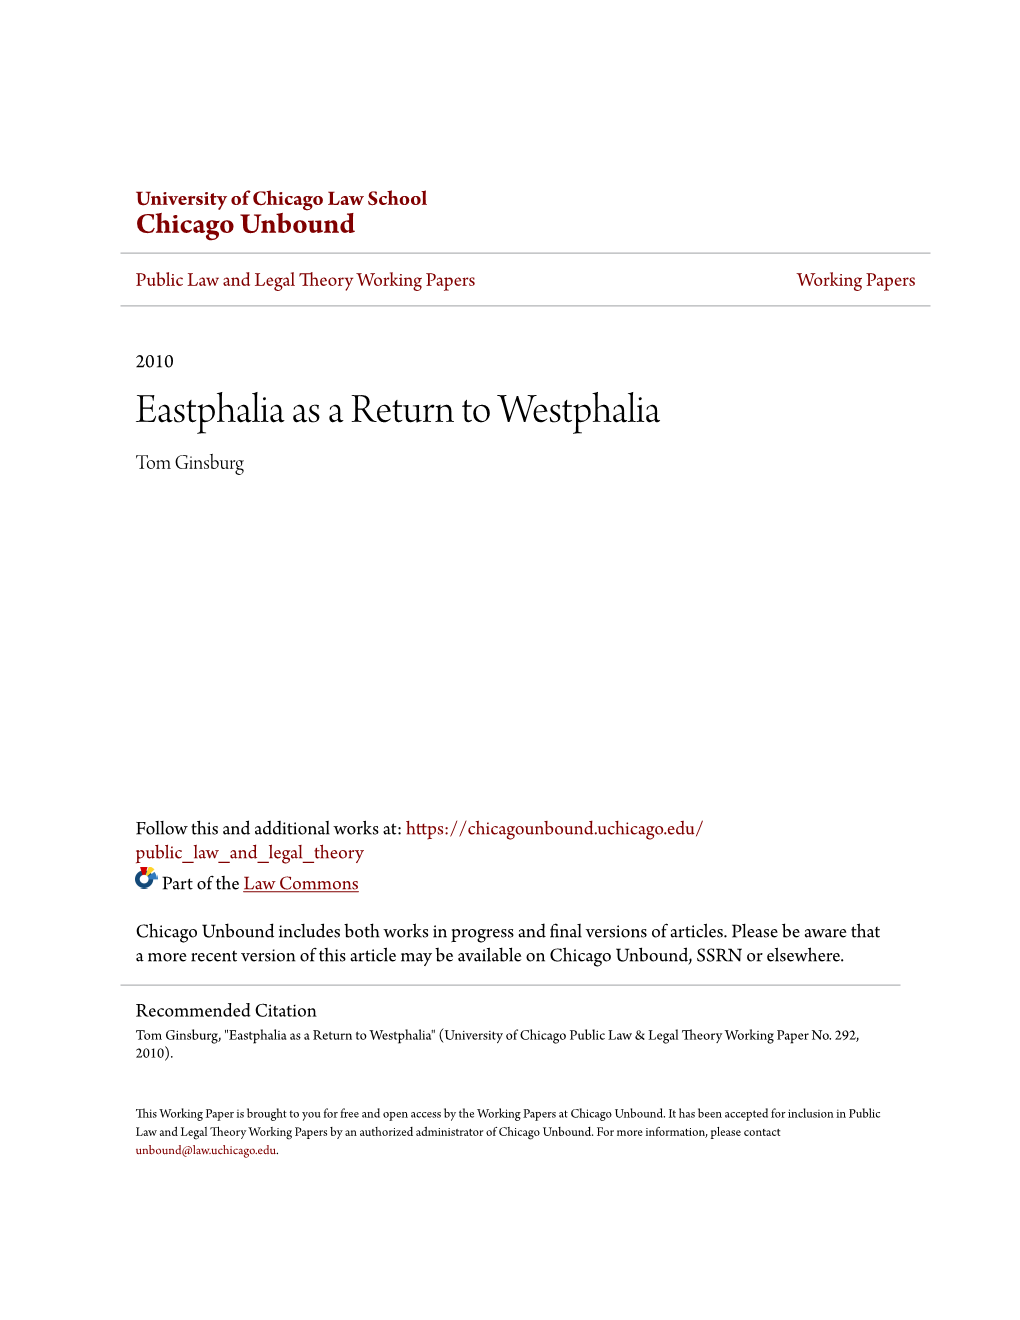 Eastphalia As a Return to Westphalia Tom Ginsburg